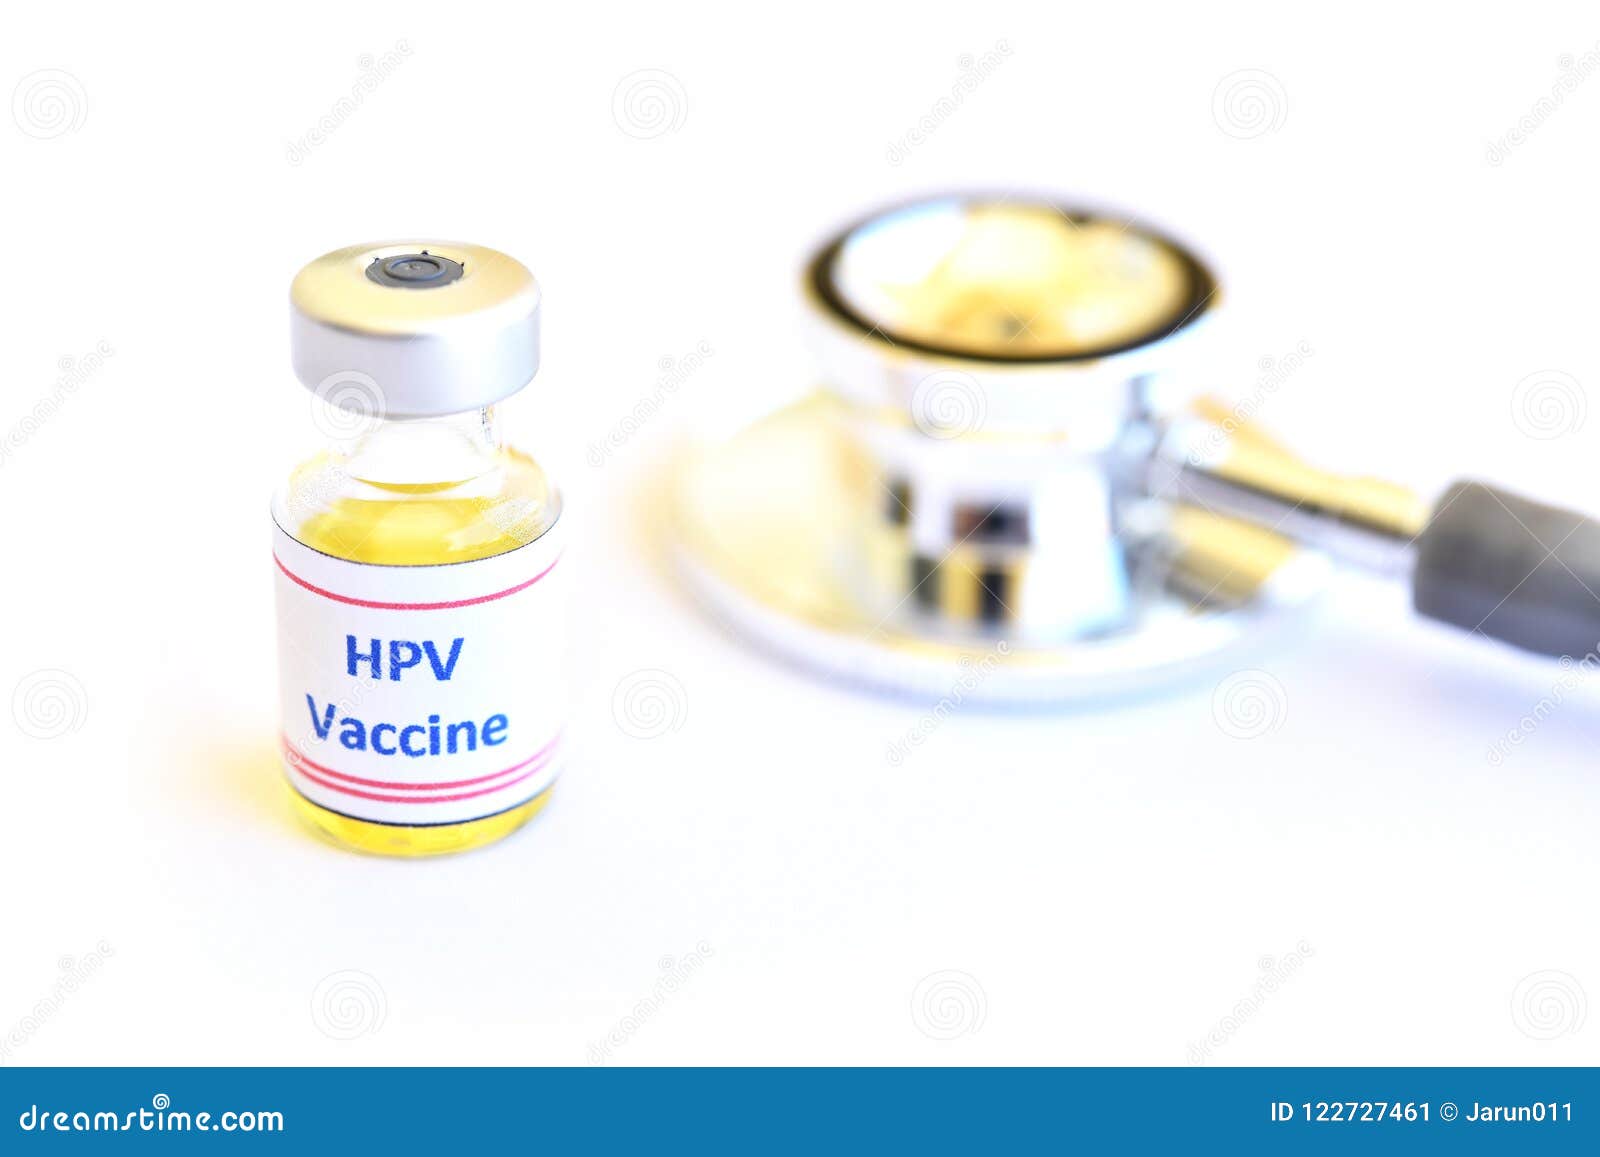 Human papillomavirus vaccine for pregnancy